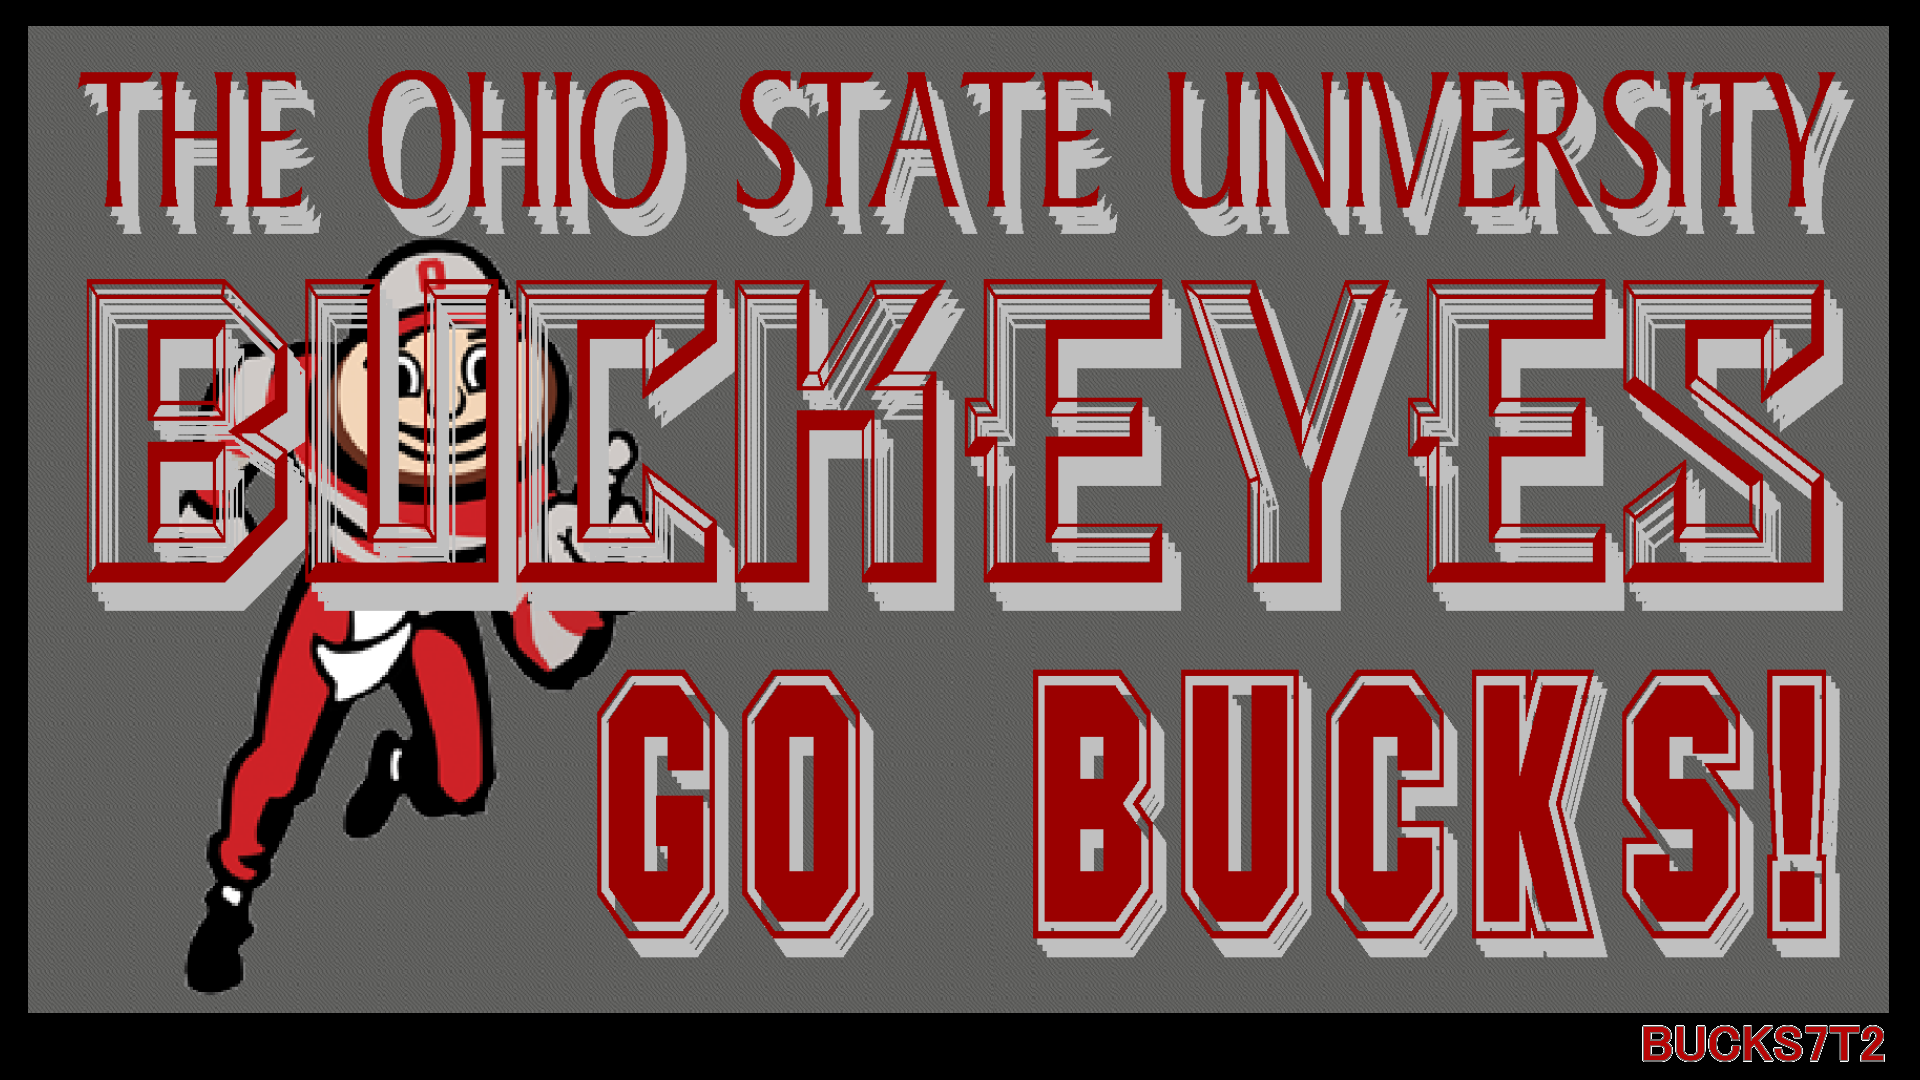 THE OHIO STATE UNIVERSITY GO BUCKS! - Ohio State Football Wallpaper